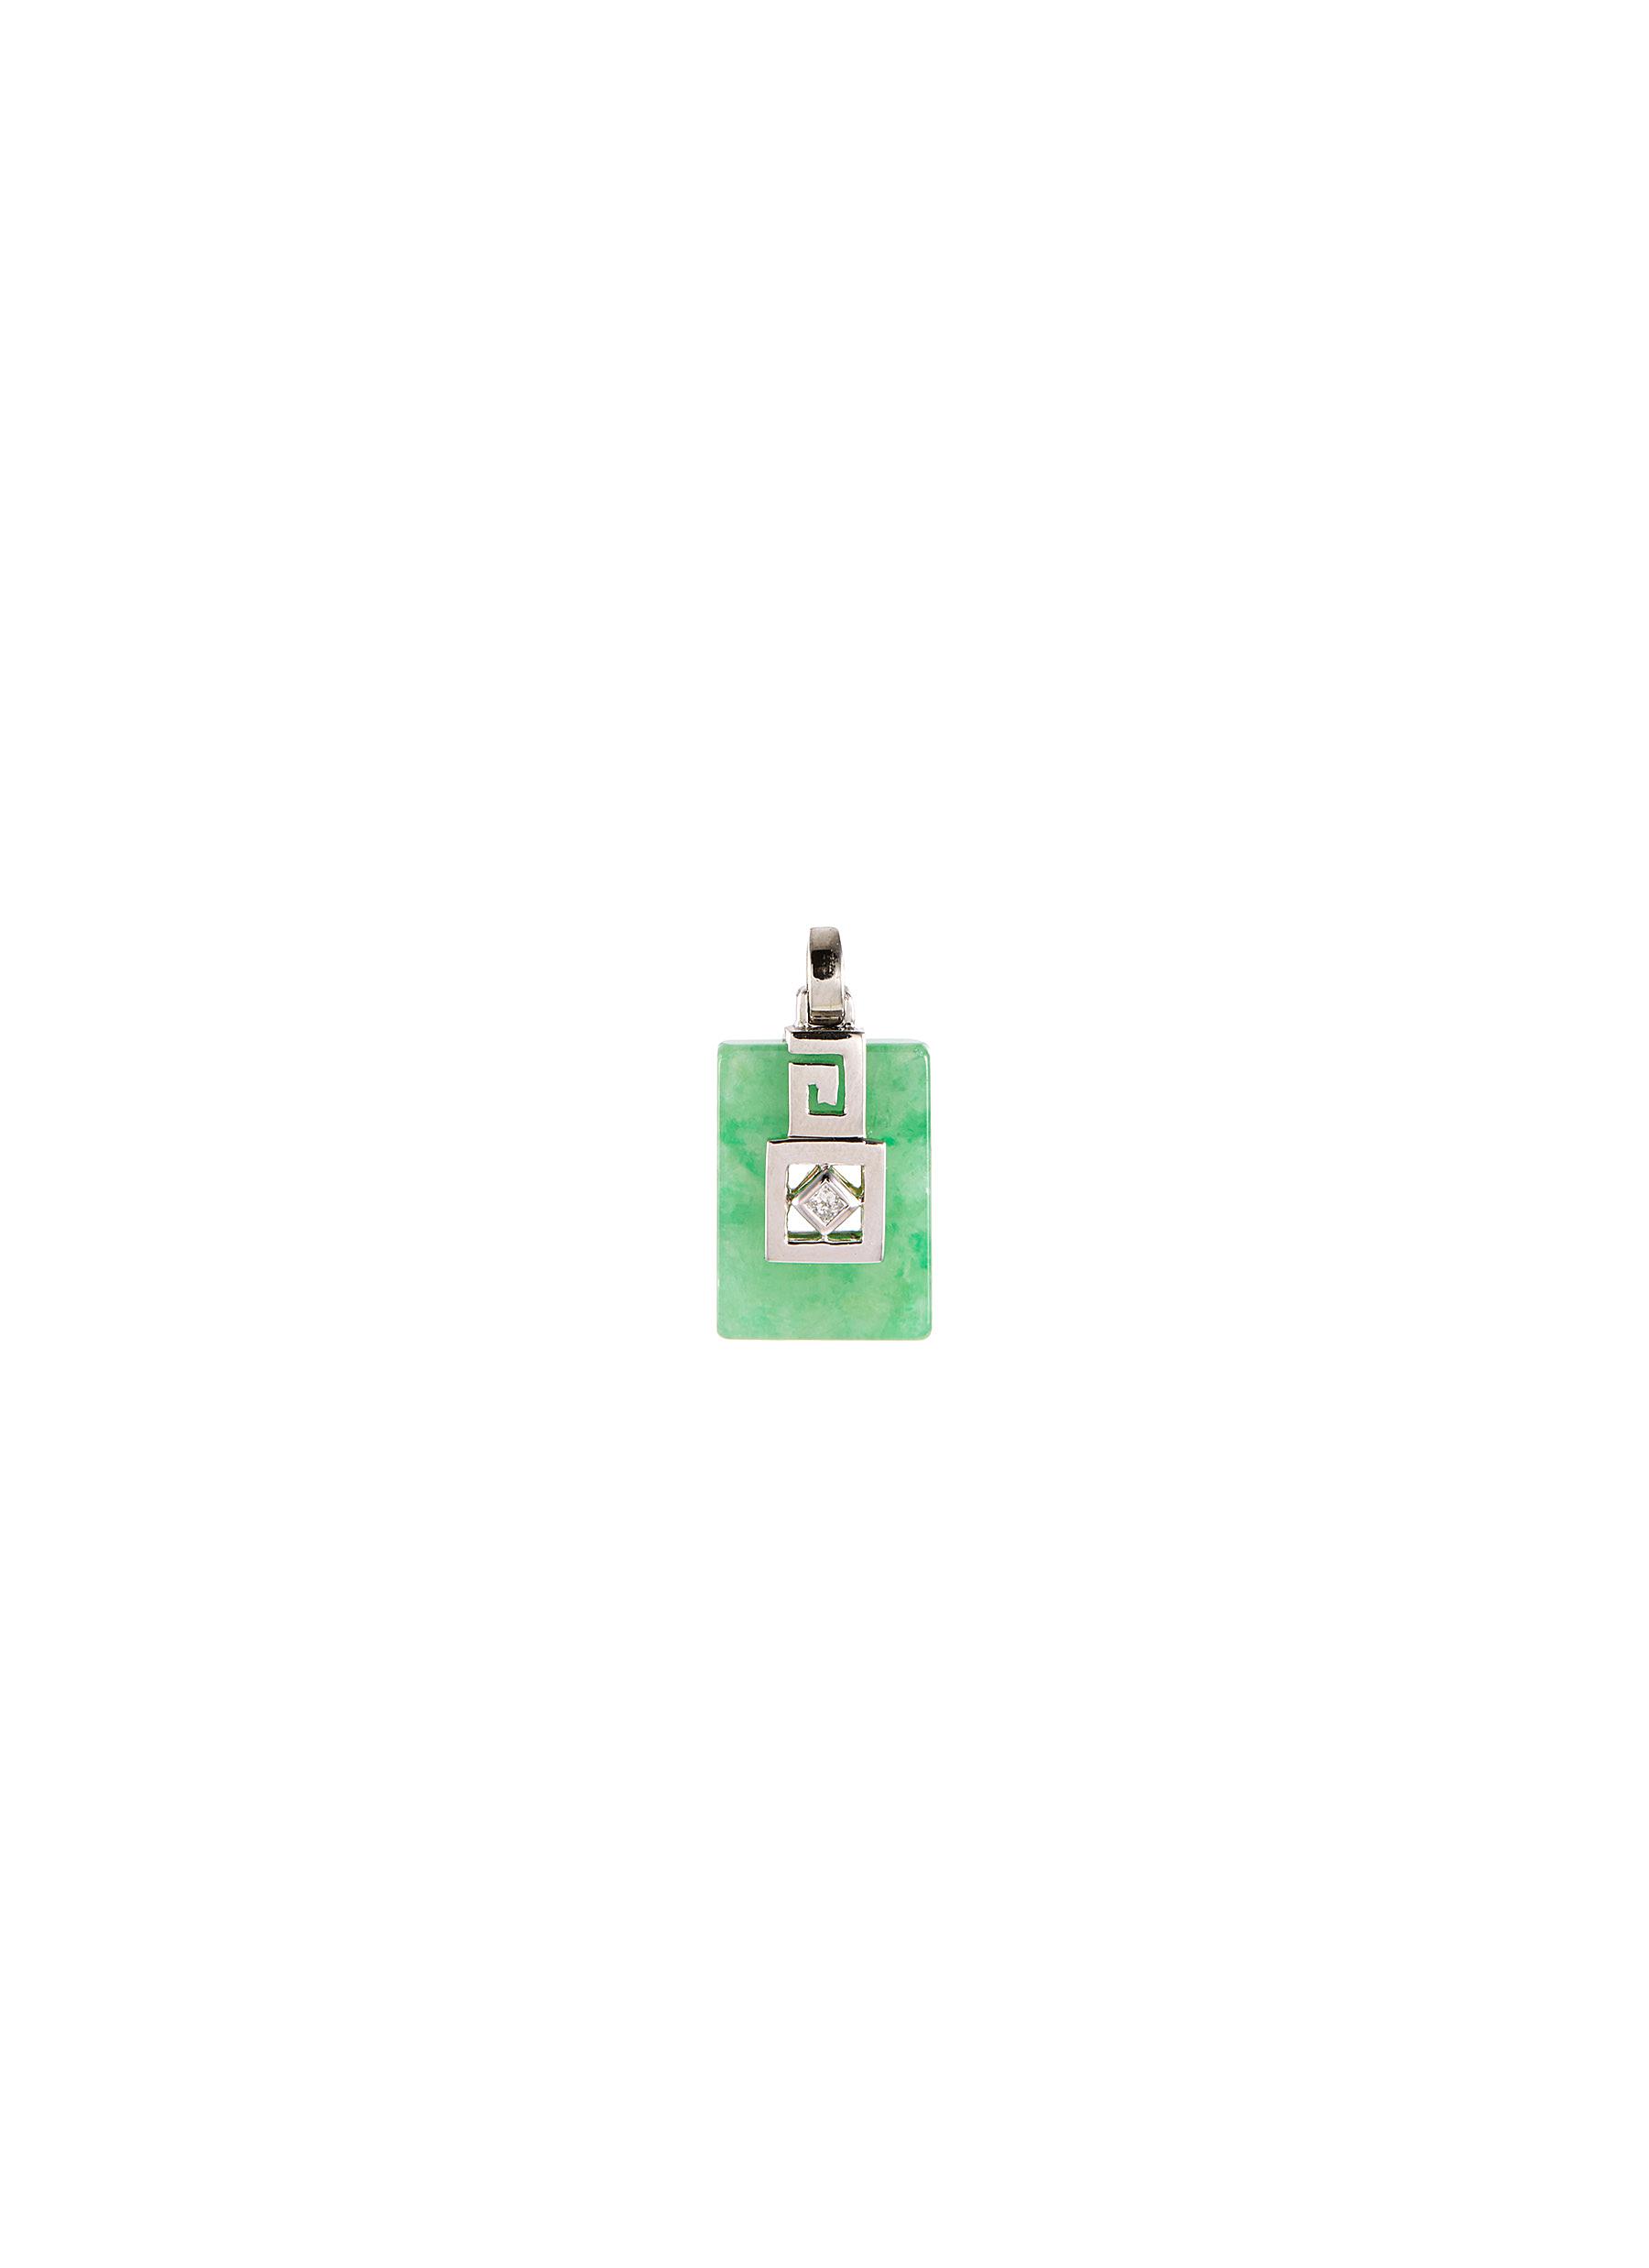 Diamond jade 18k white gold pendant